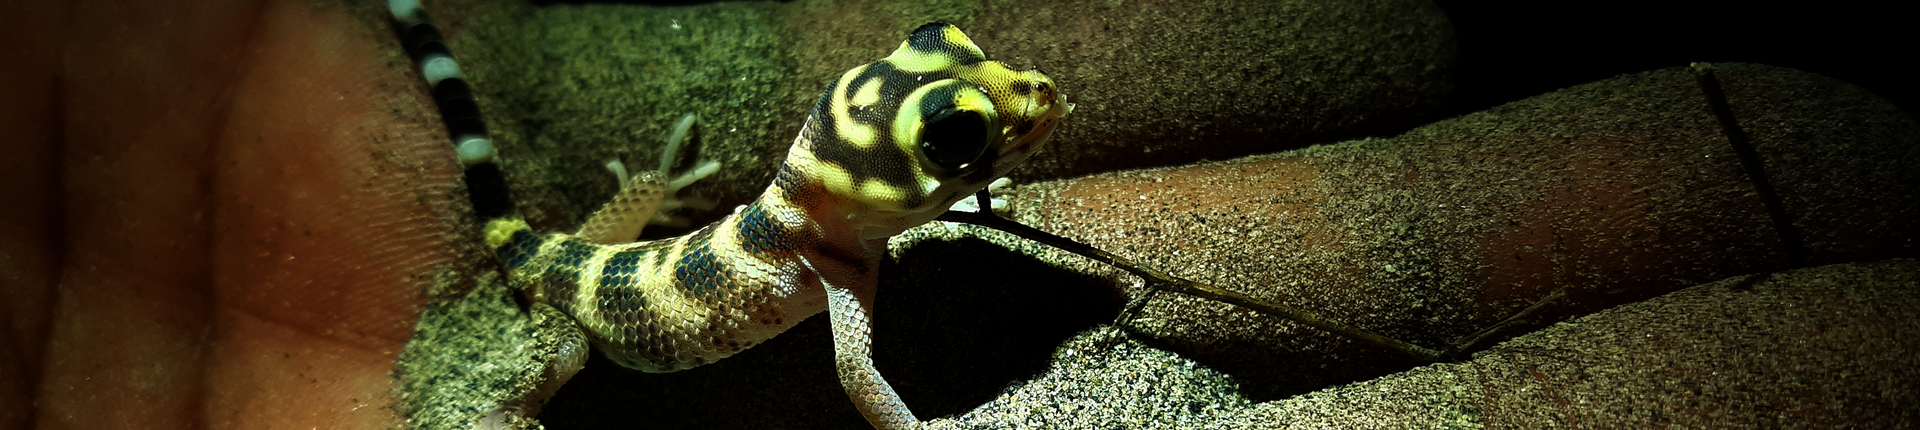 Rustamov Frog Eze Gecko Photo: M. Mustaeva